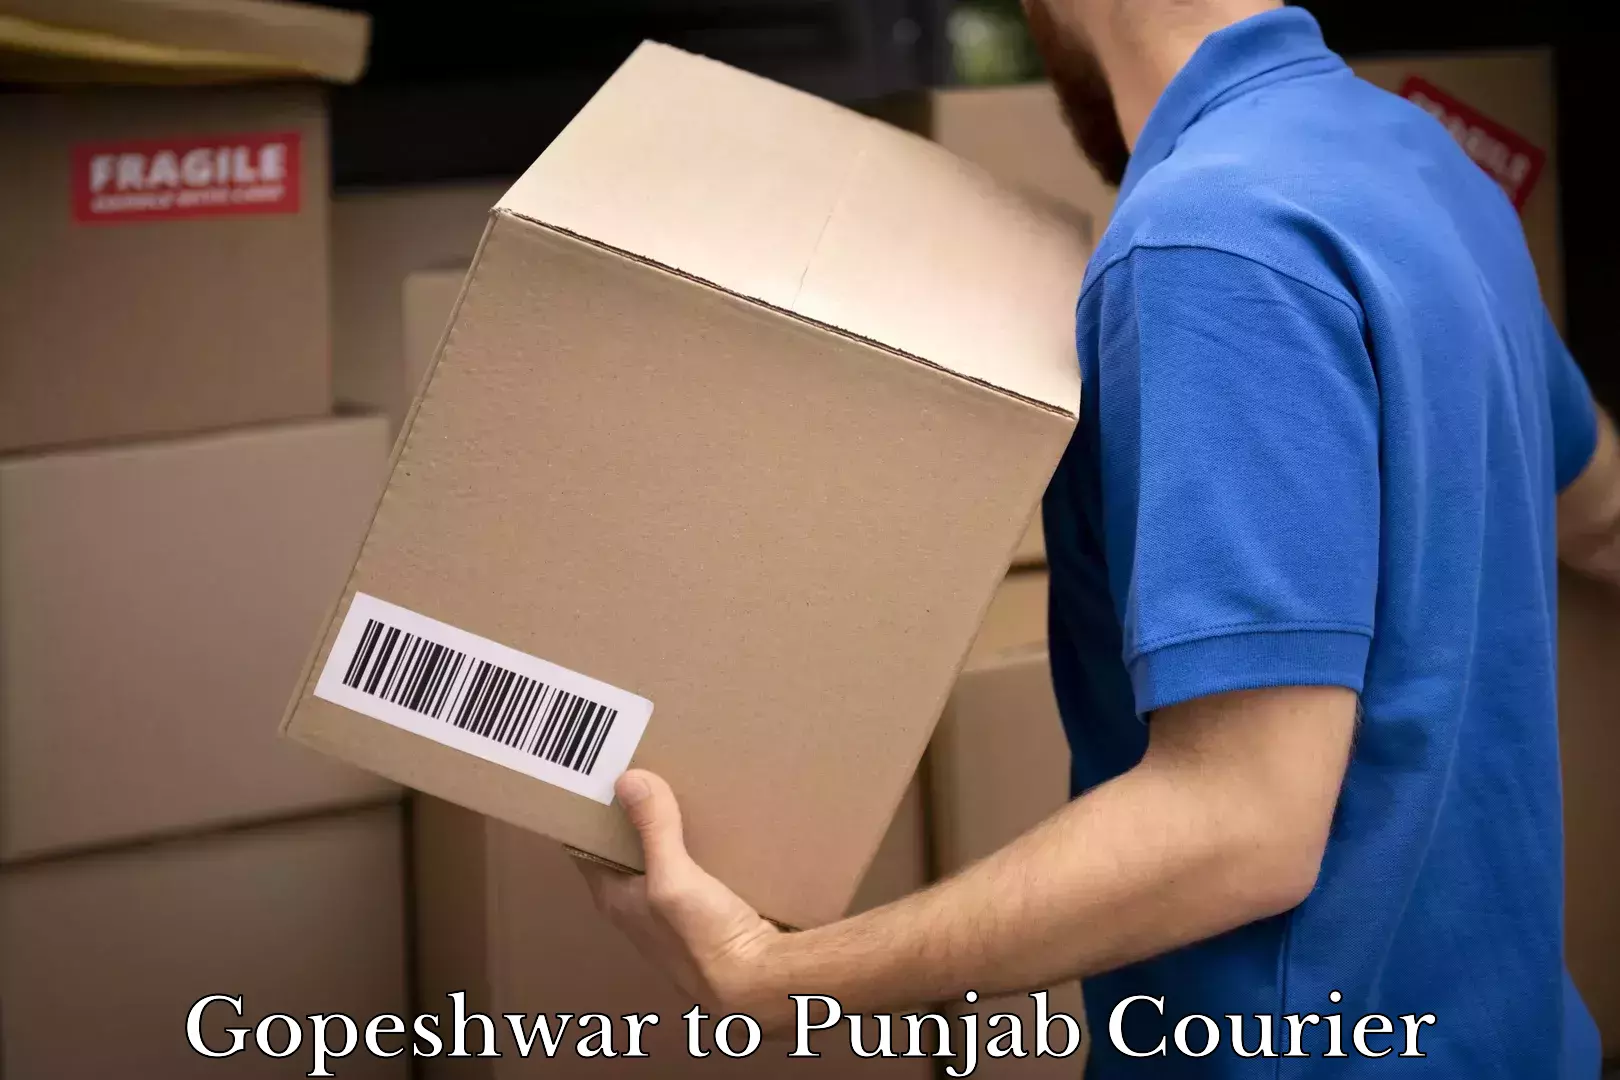 Full-service courier options Gopeshwar to Punjab